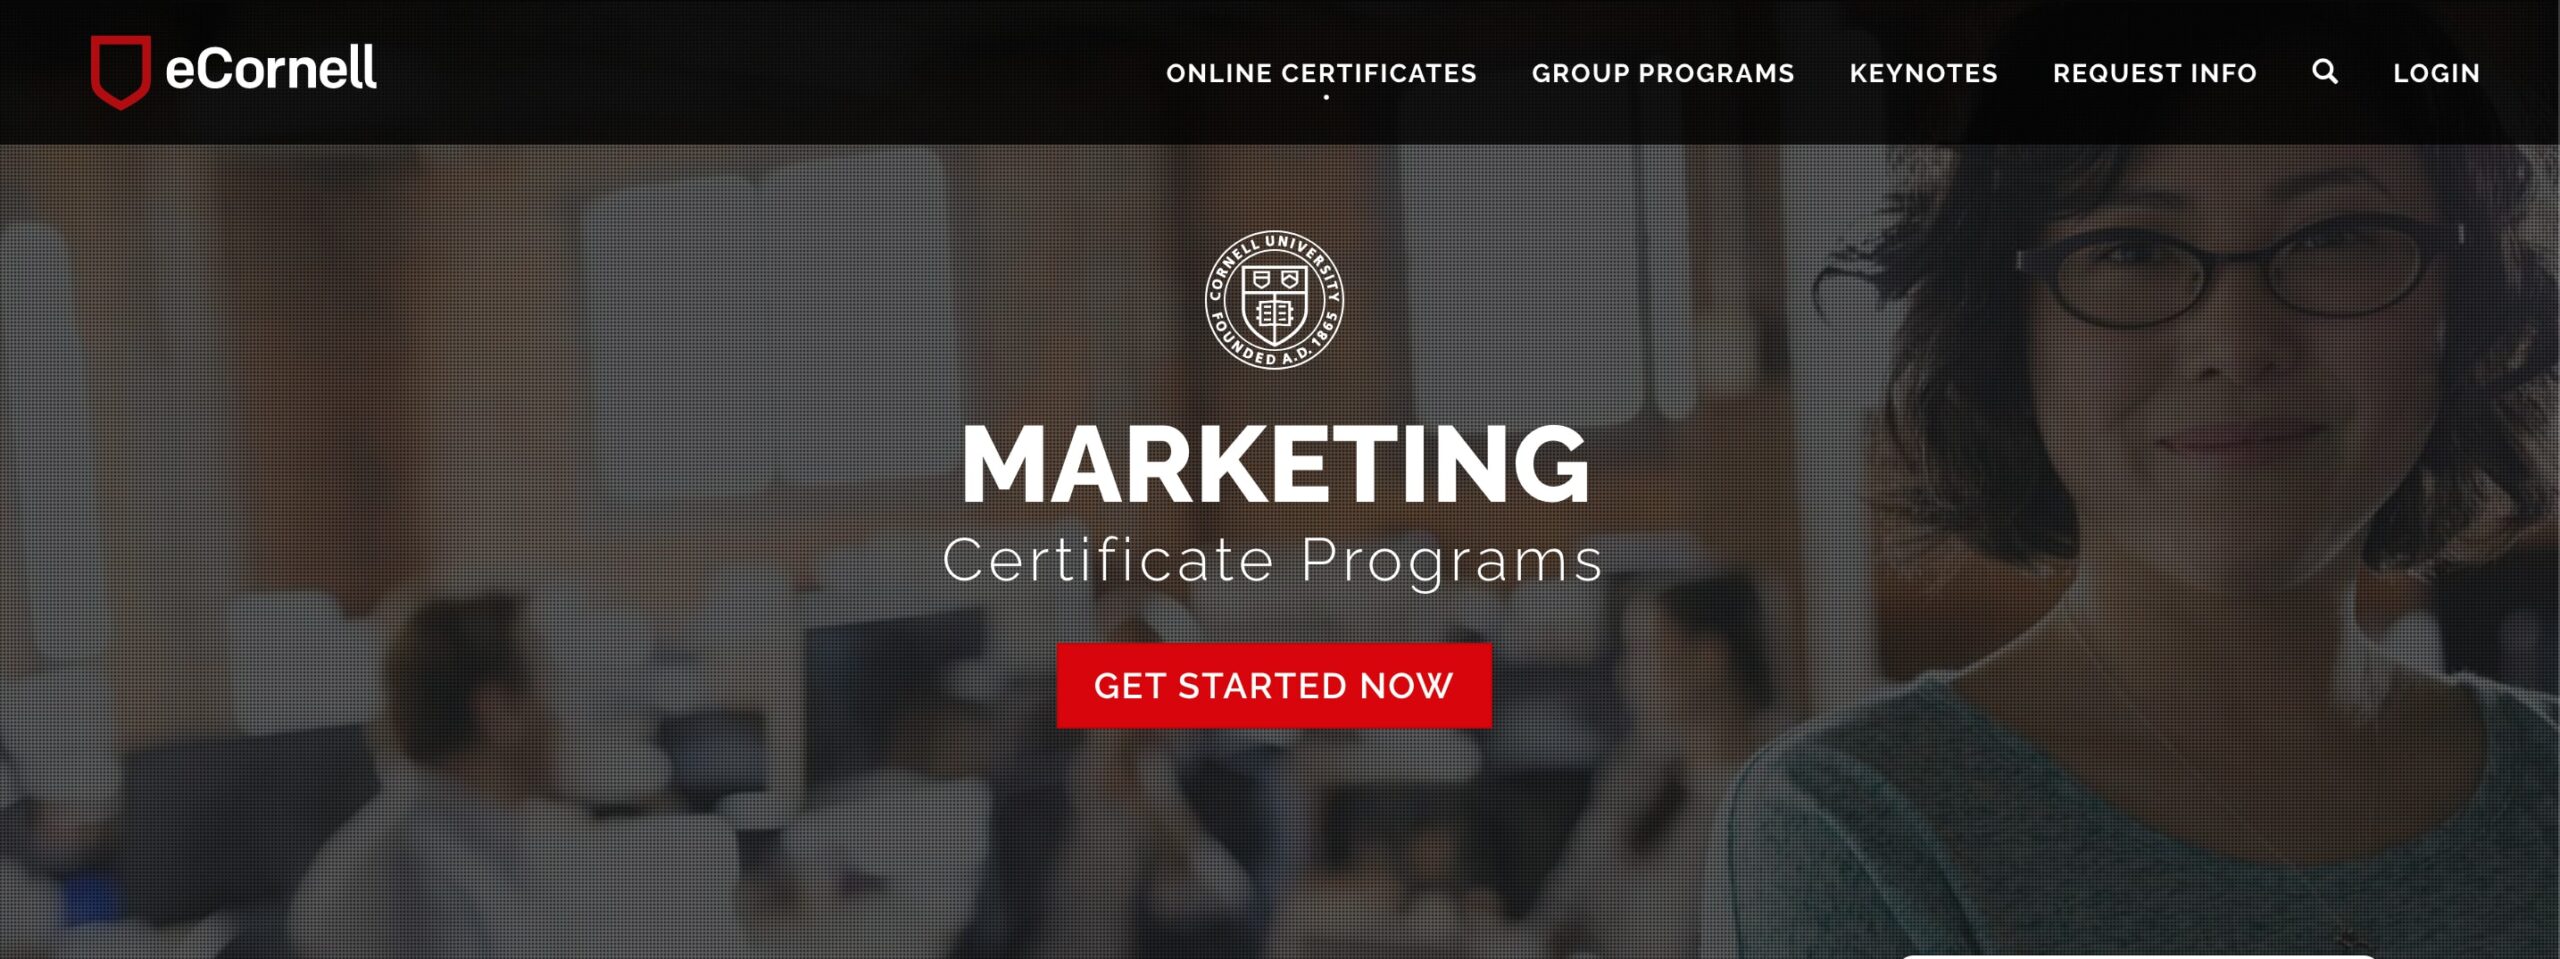 Cornell University Digital Marketing Certificate Program